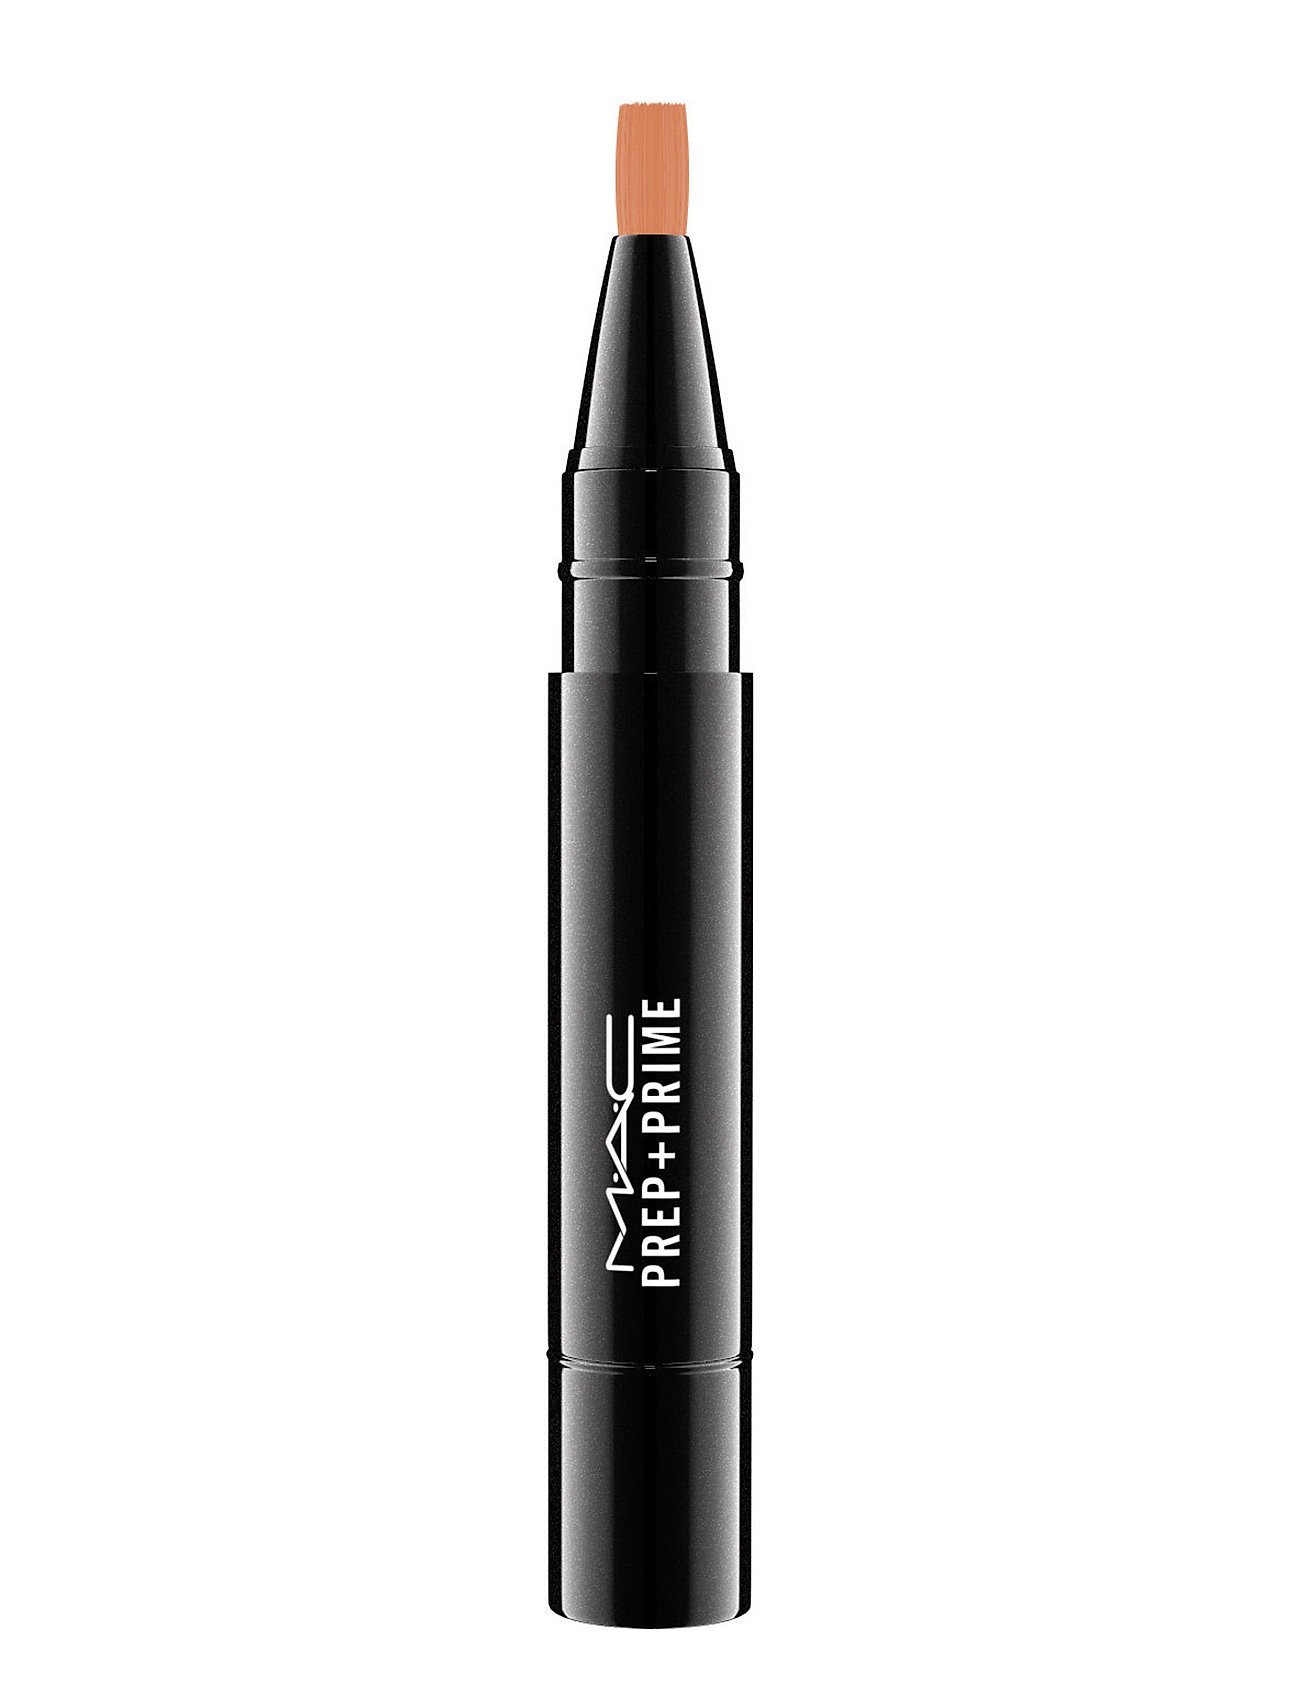 Prep + Prime Highlighter - Peach Lustre Highlighter Contour Makeup Multi/patterned MAC